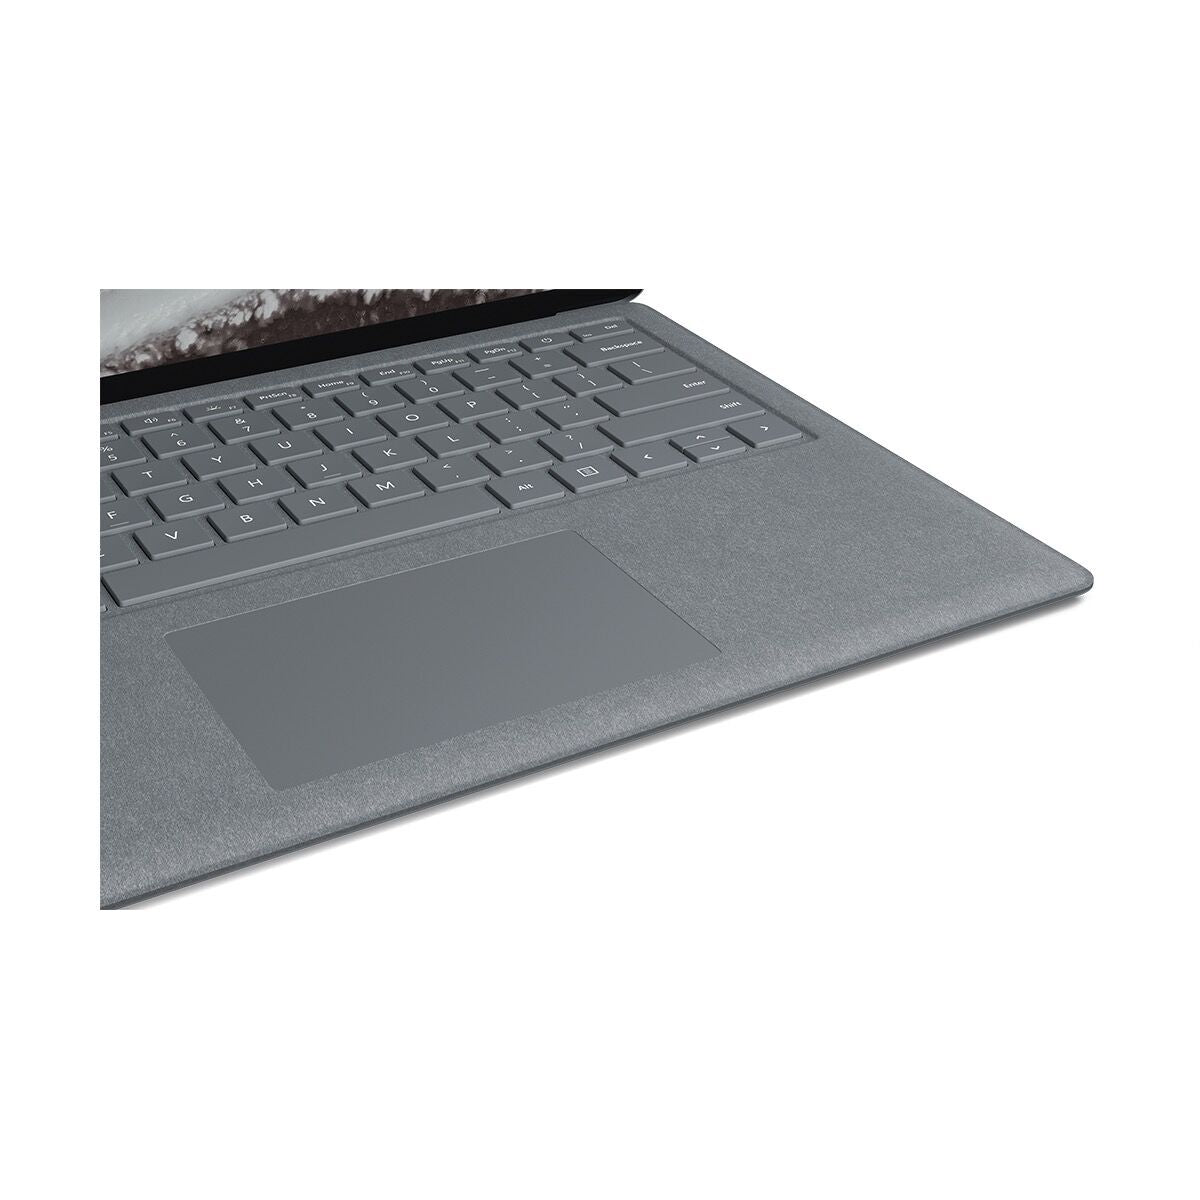 Microsoft Surface Laptop 2 Core i5 8GB 128GB - Platinum - LQL-00001